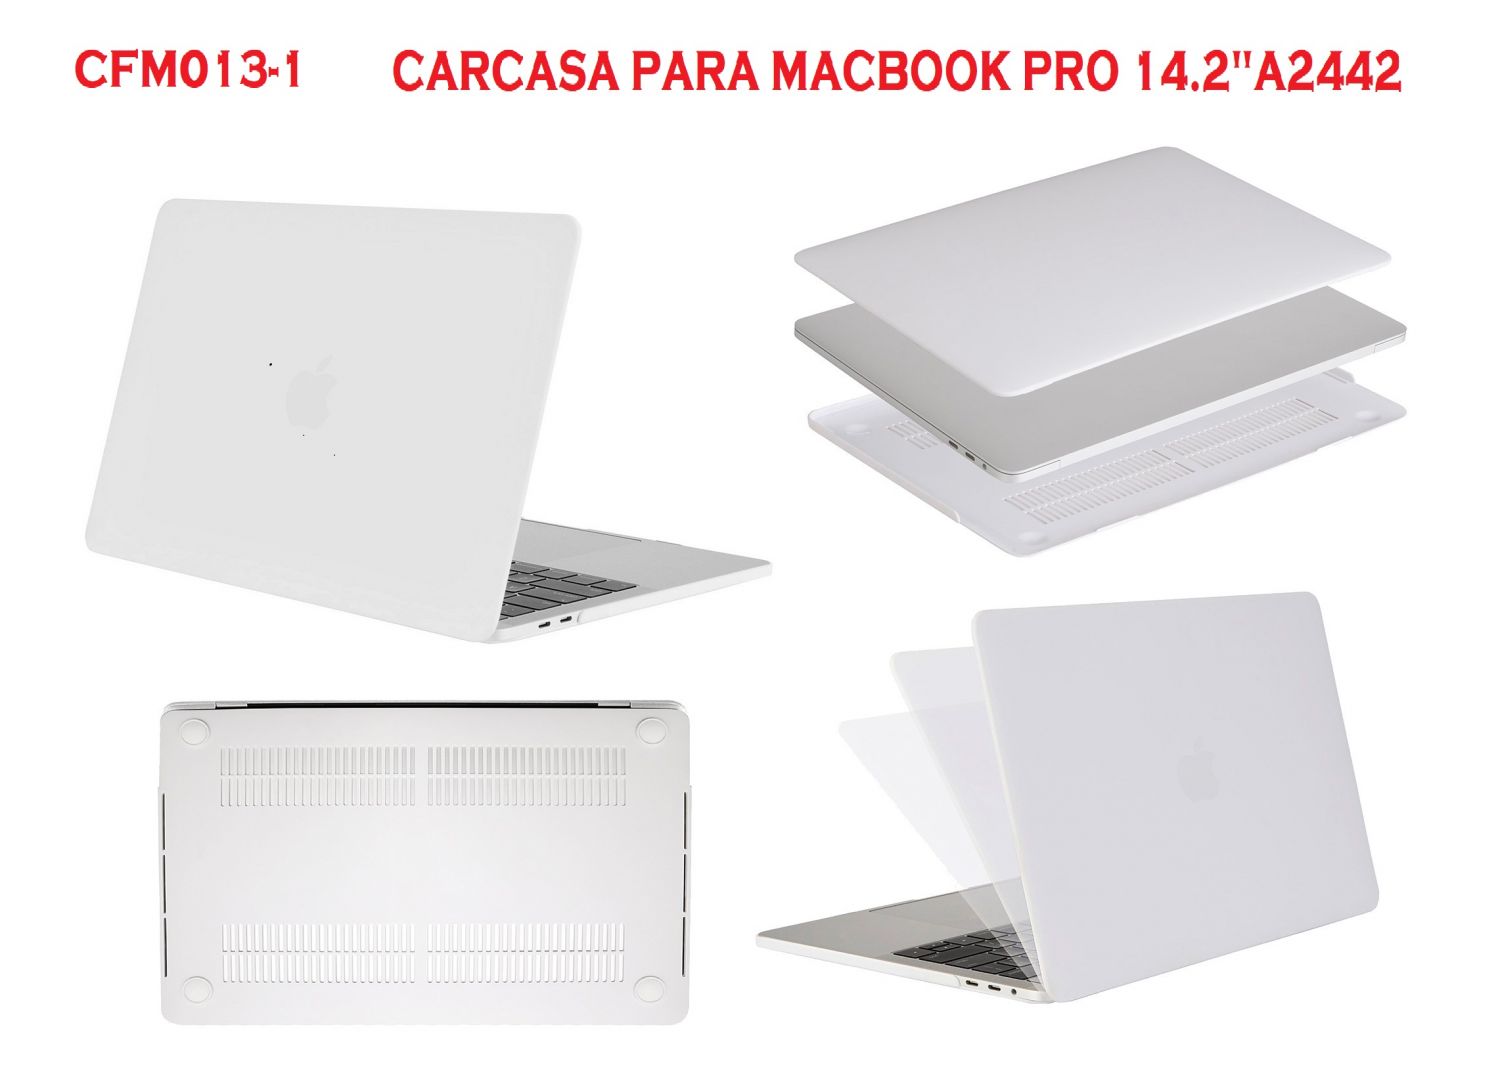 Funda Dura para MacBook Pro 14.2' (A2422),CFM013